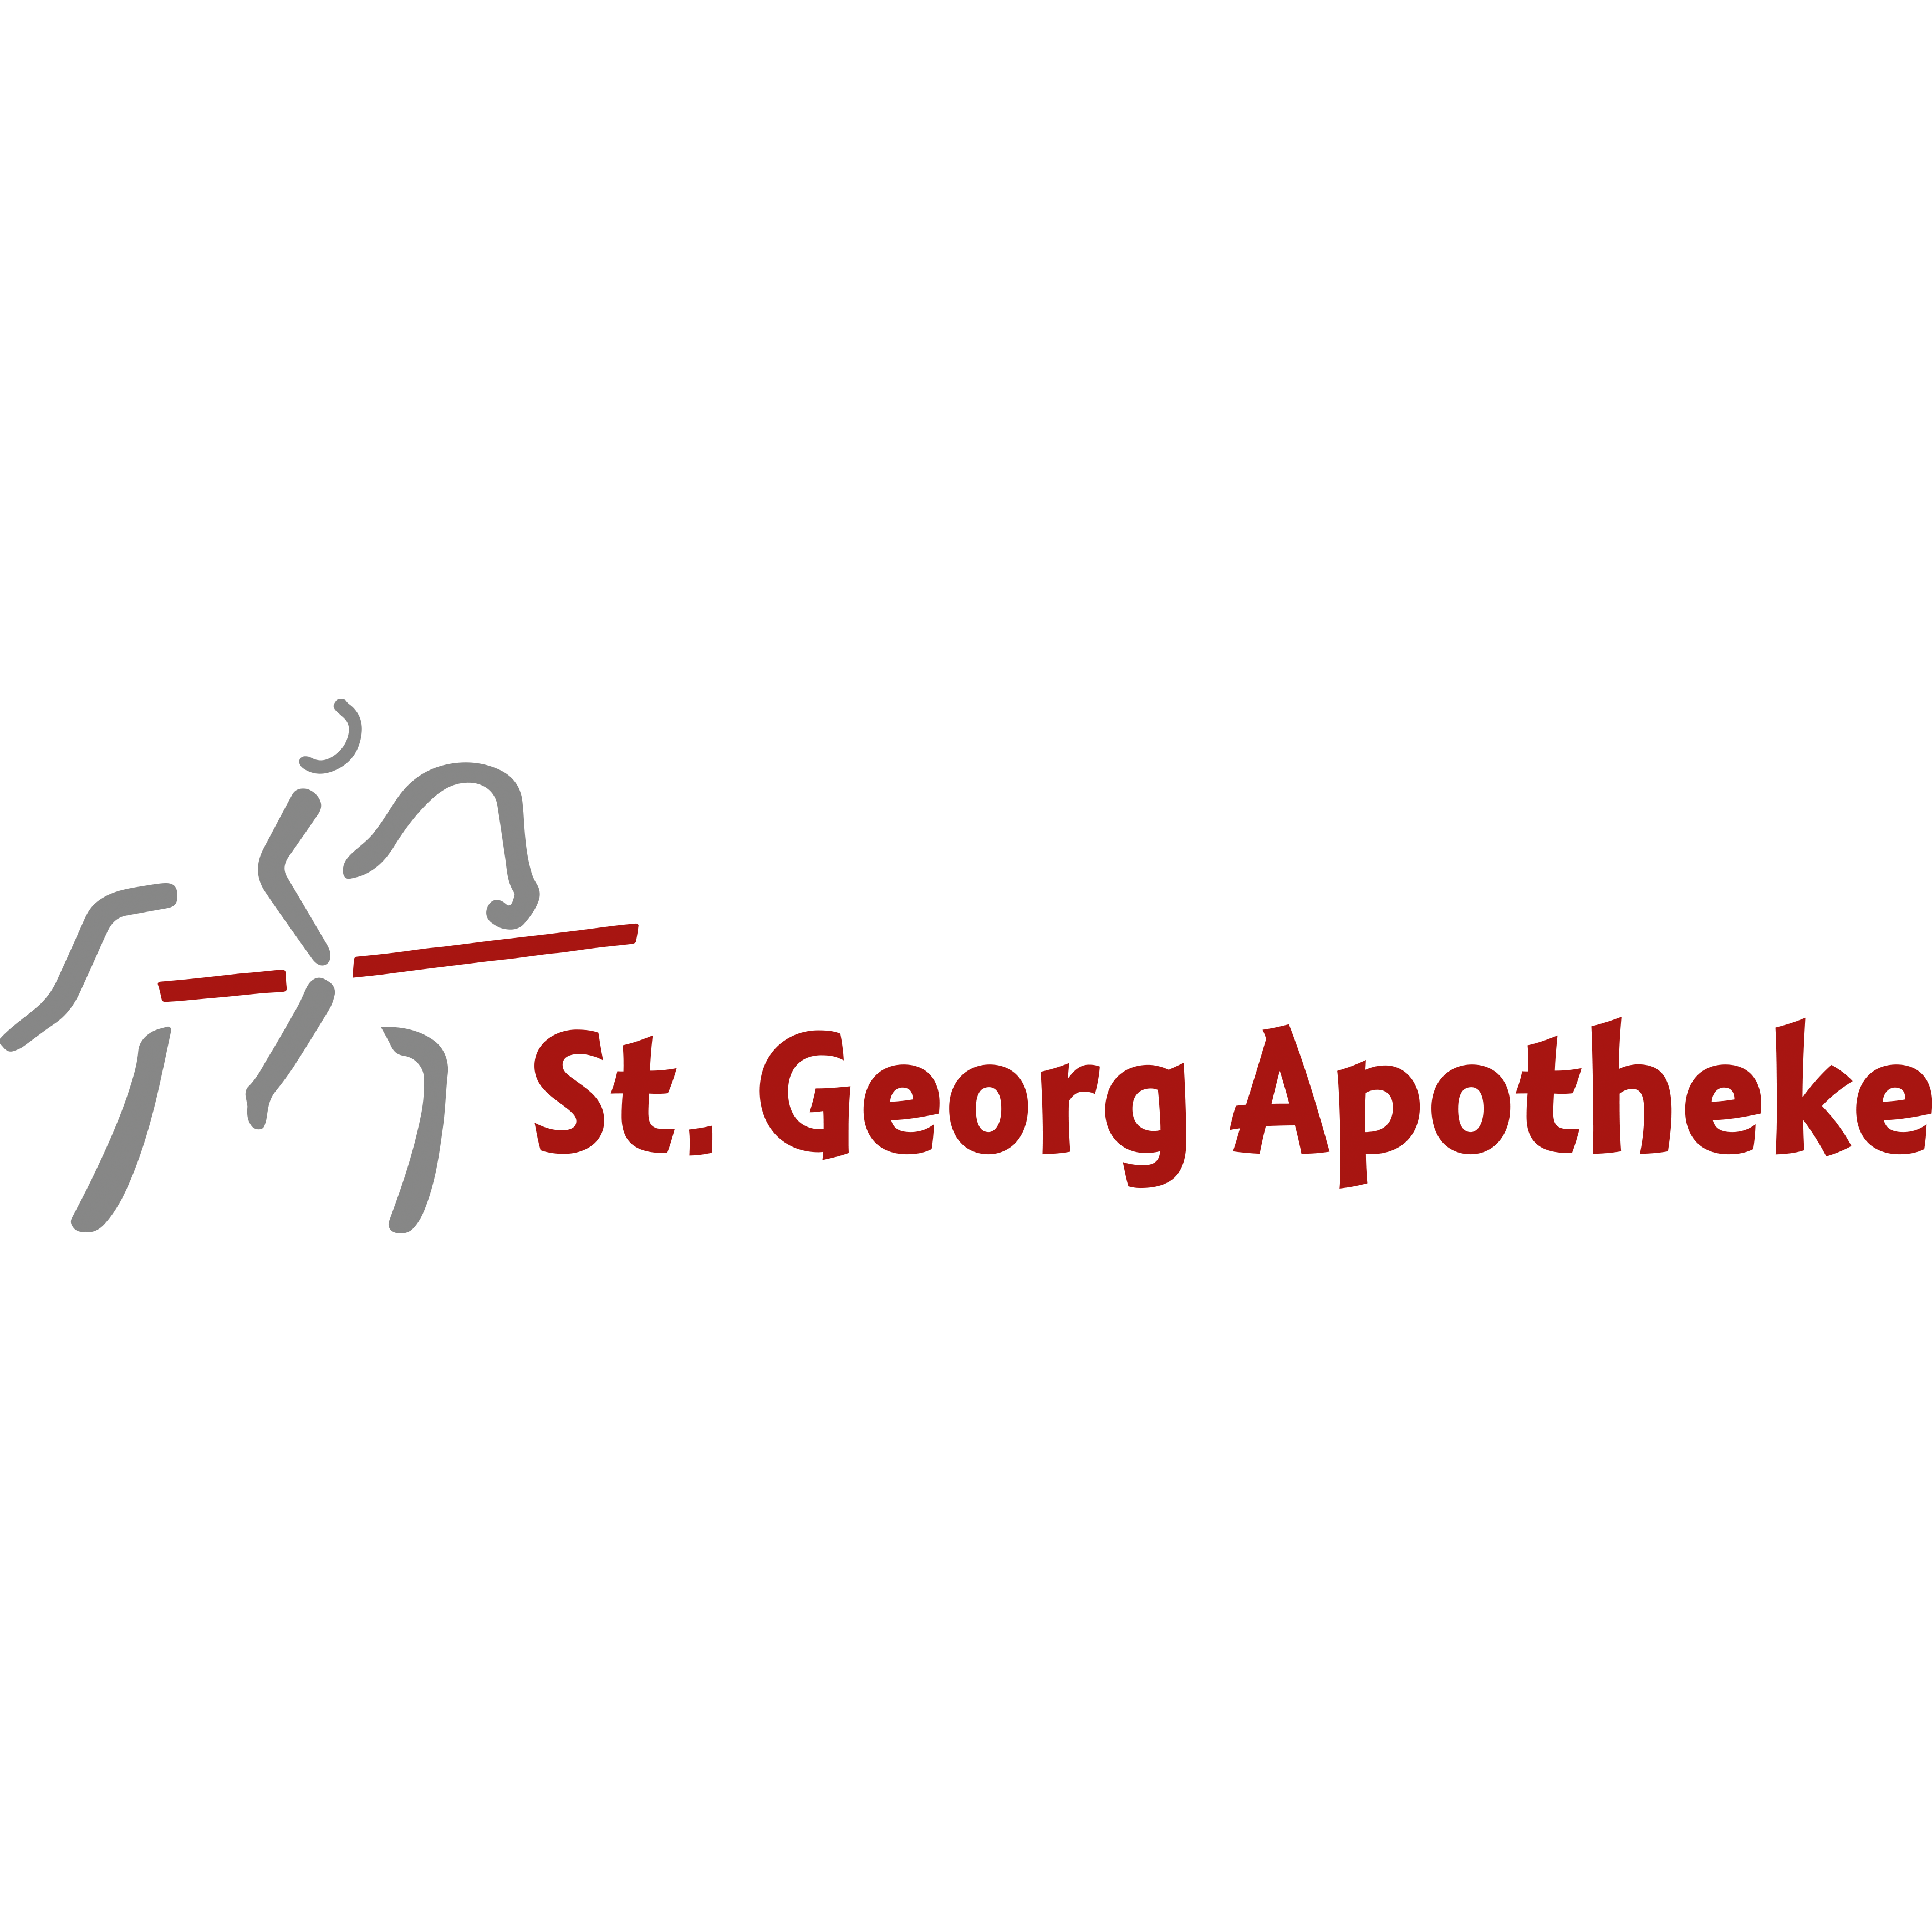 St. Georg-Apotheke in Sottrum Kreis Rotenburg - Logo